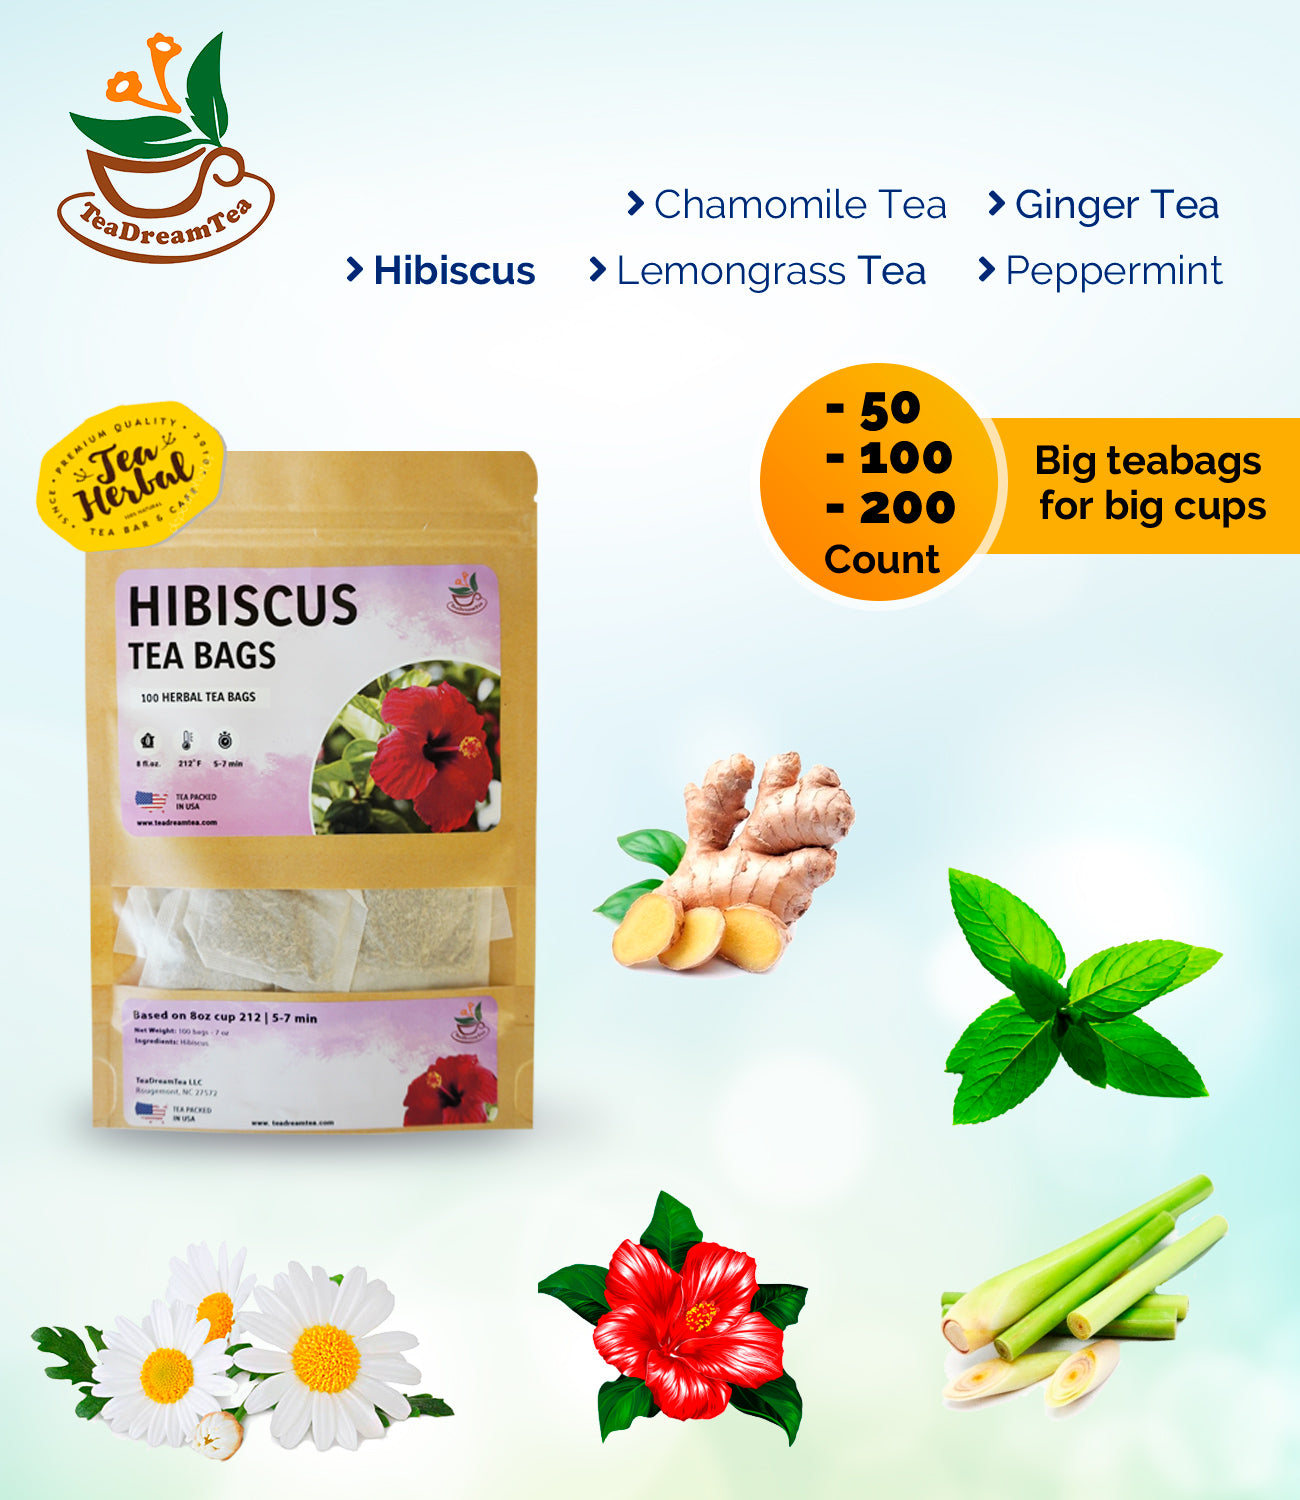 Hibiscus Flower Tea Bags - Size 50, 100 and 200 bags - TeaDreamTea